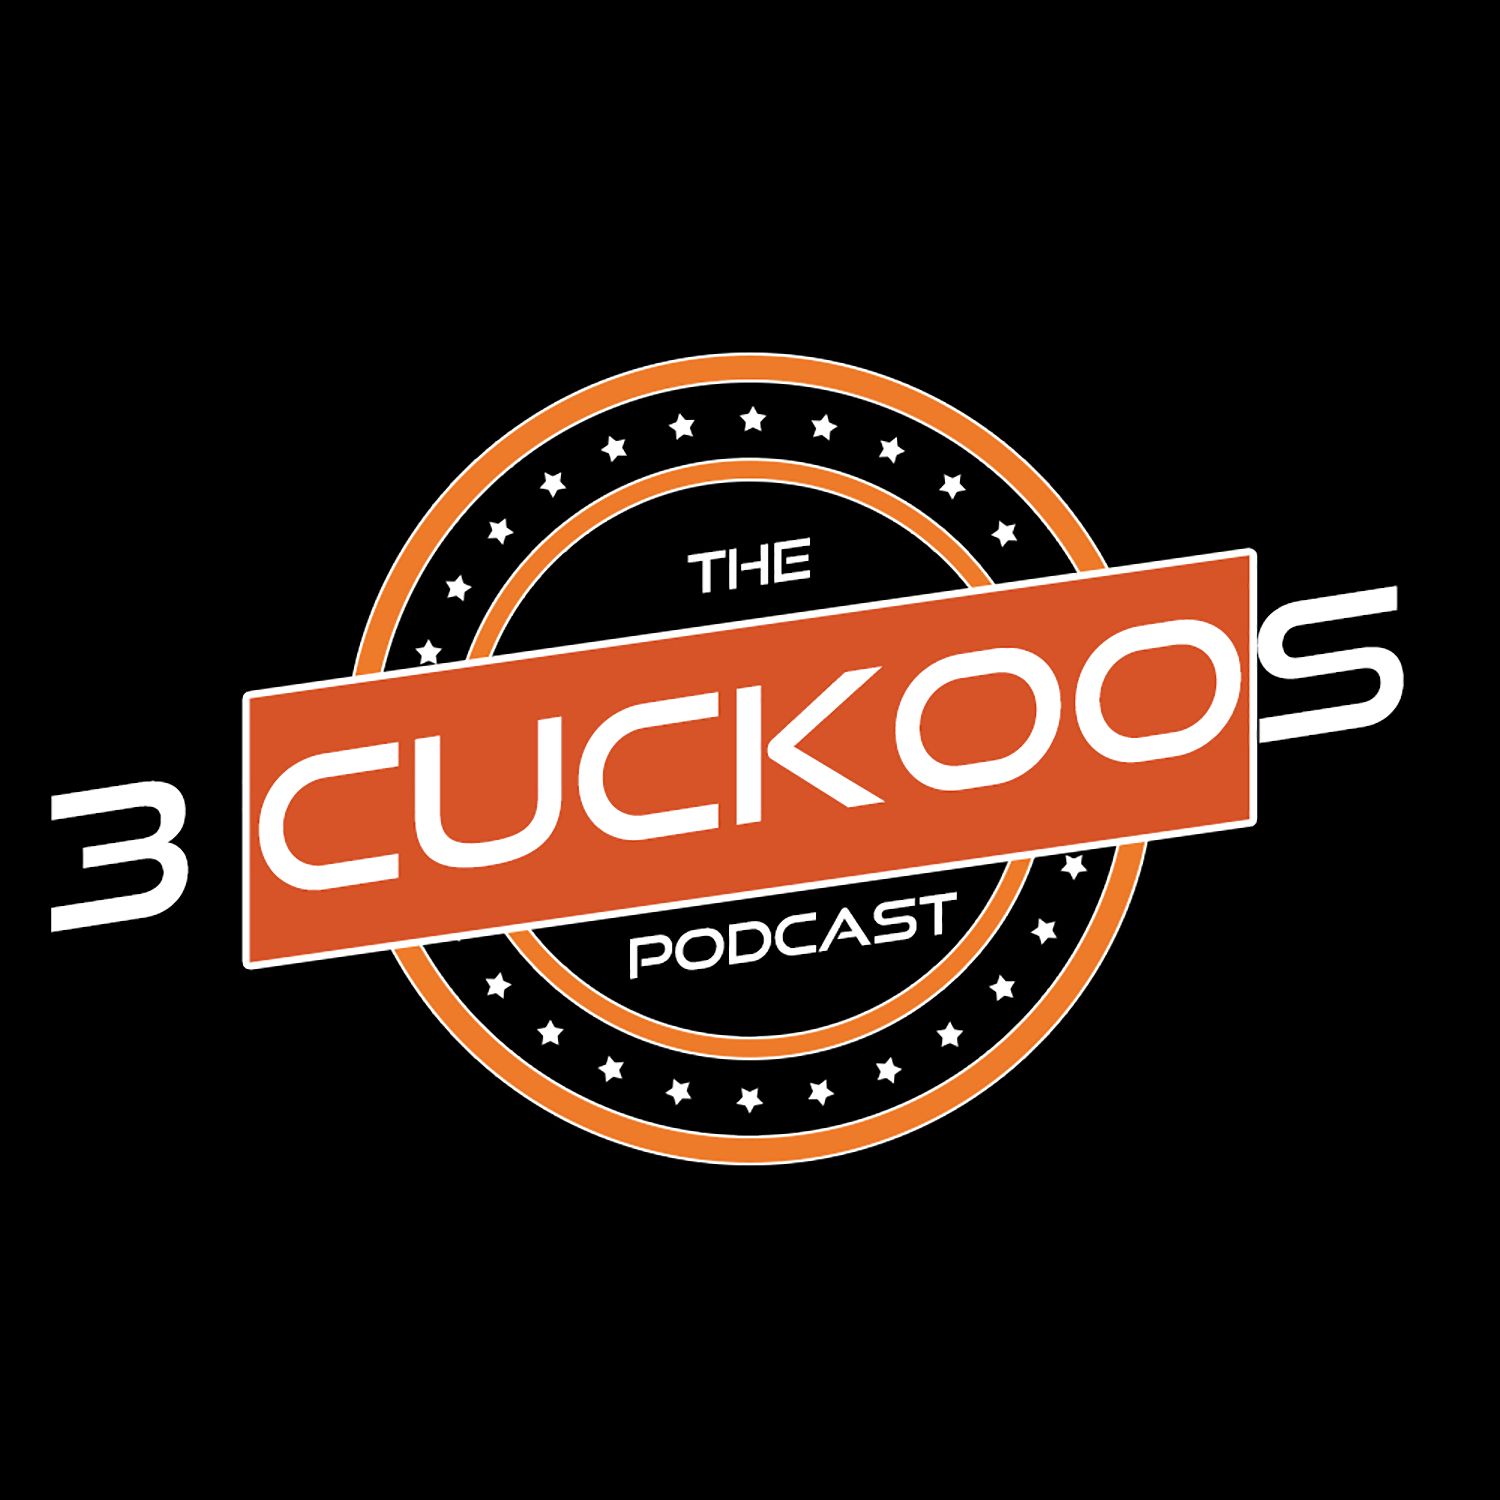 3 Cuckoos Podcast